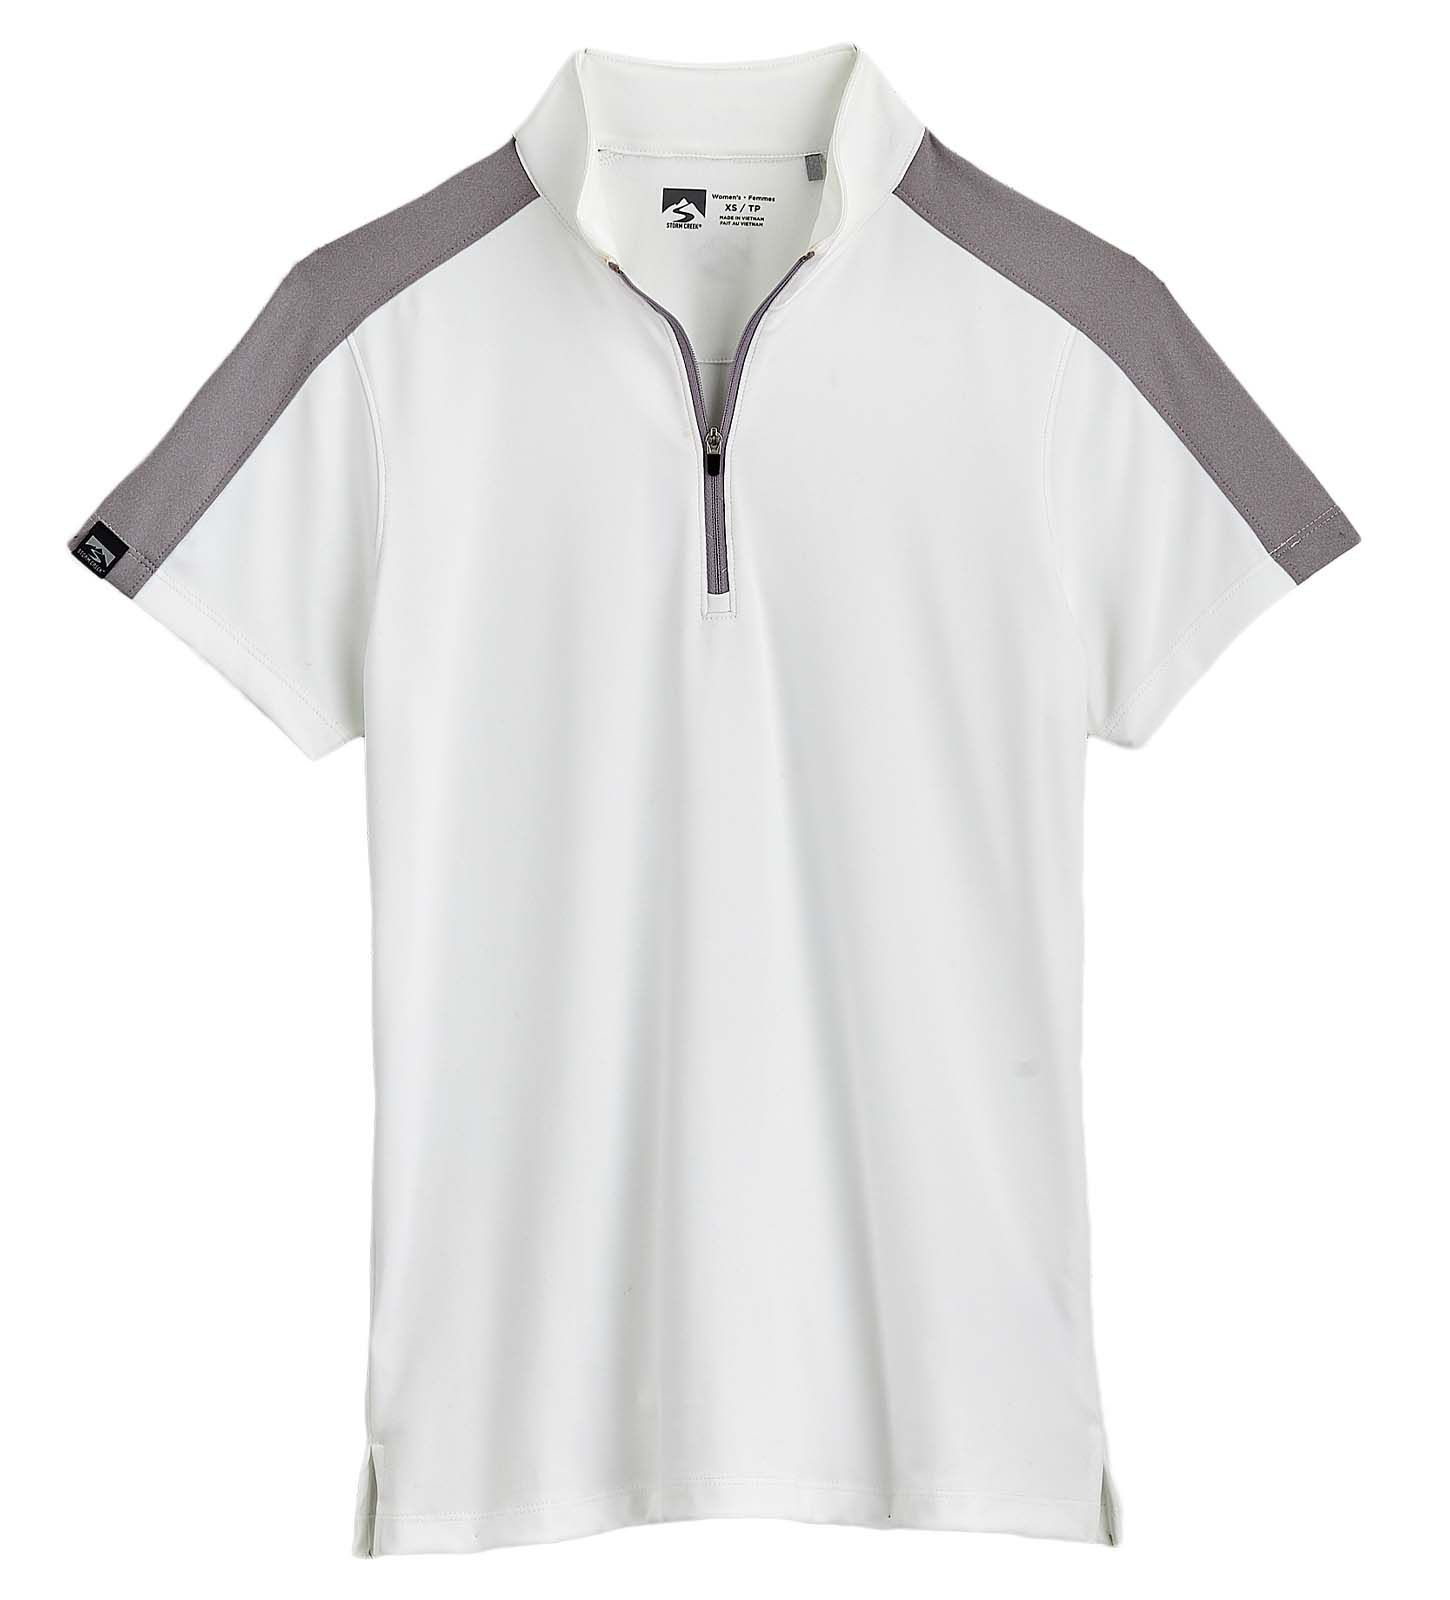 Storm Creek Activator Short-Sleeve Polo Shirt for Ladies - Dark Heather Gray/Black - White/Light Heather Gray - XL